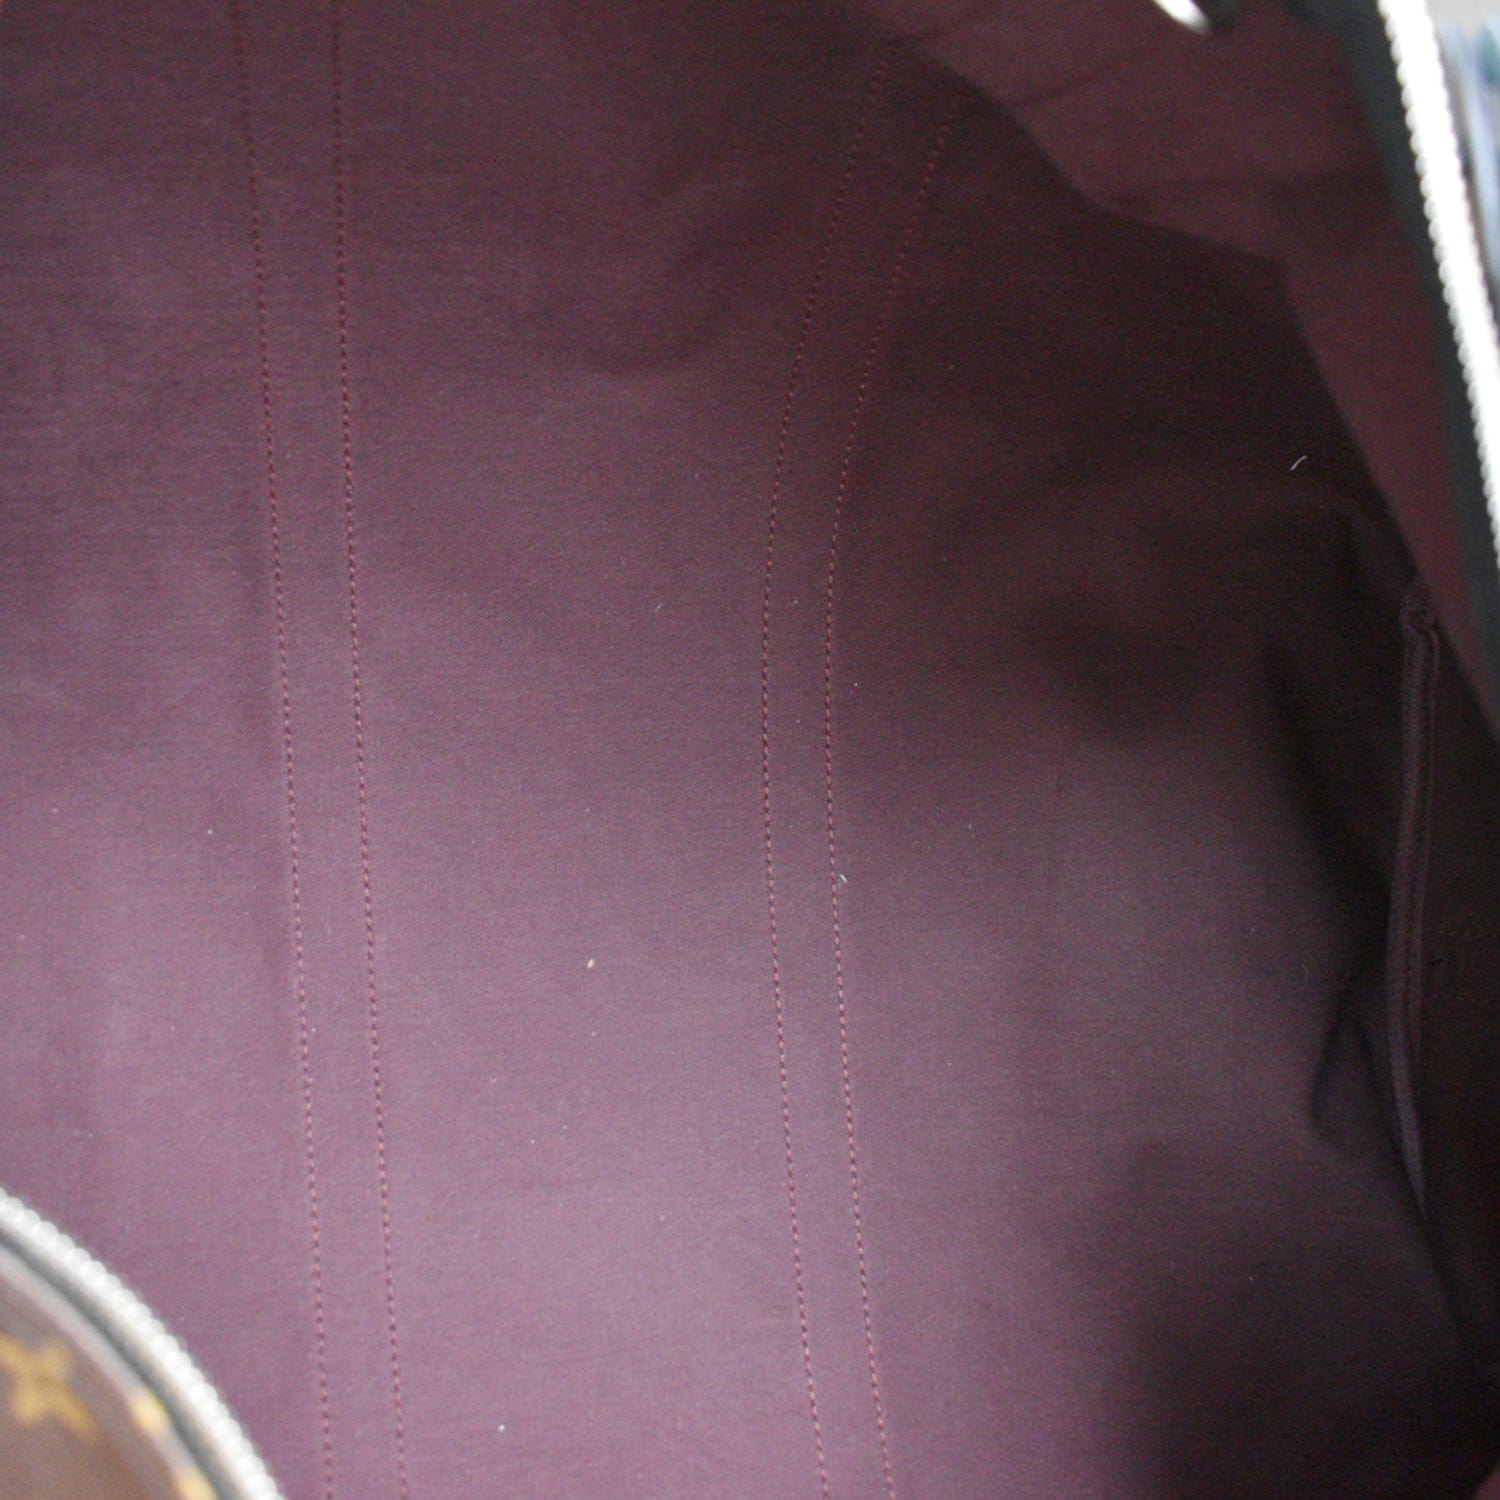 Louis Vuitton Keepall bag 55 shoulder strap customized Scarface